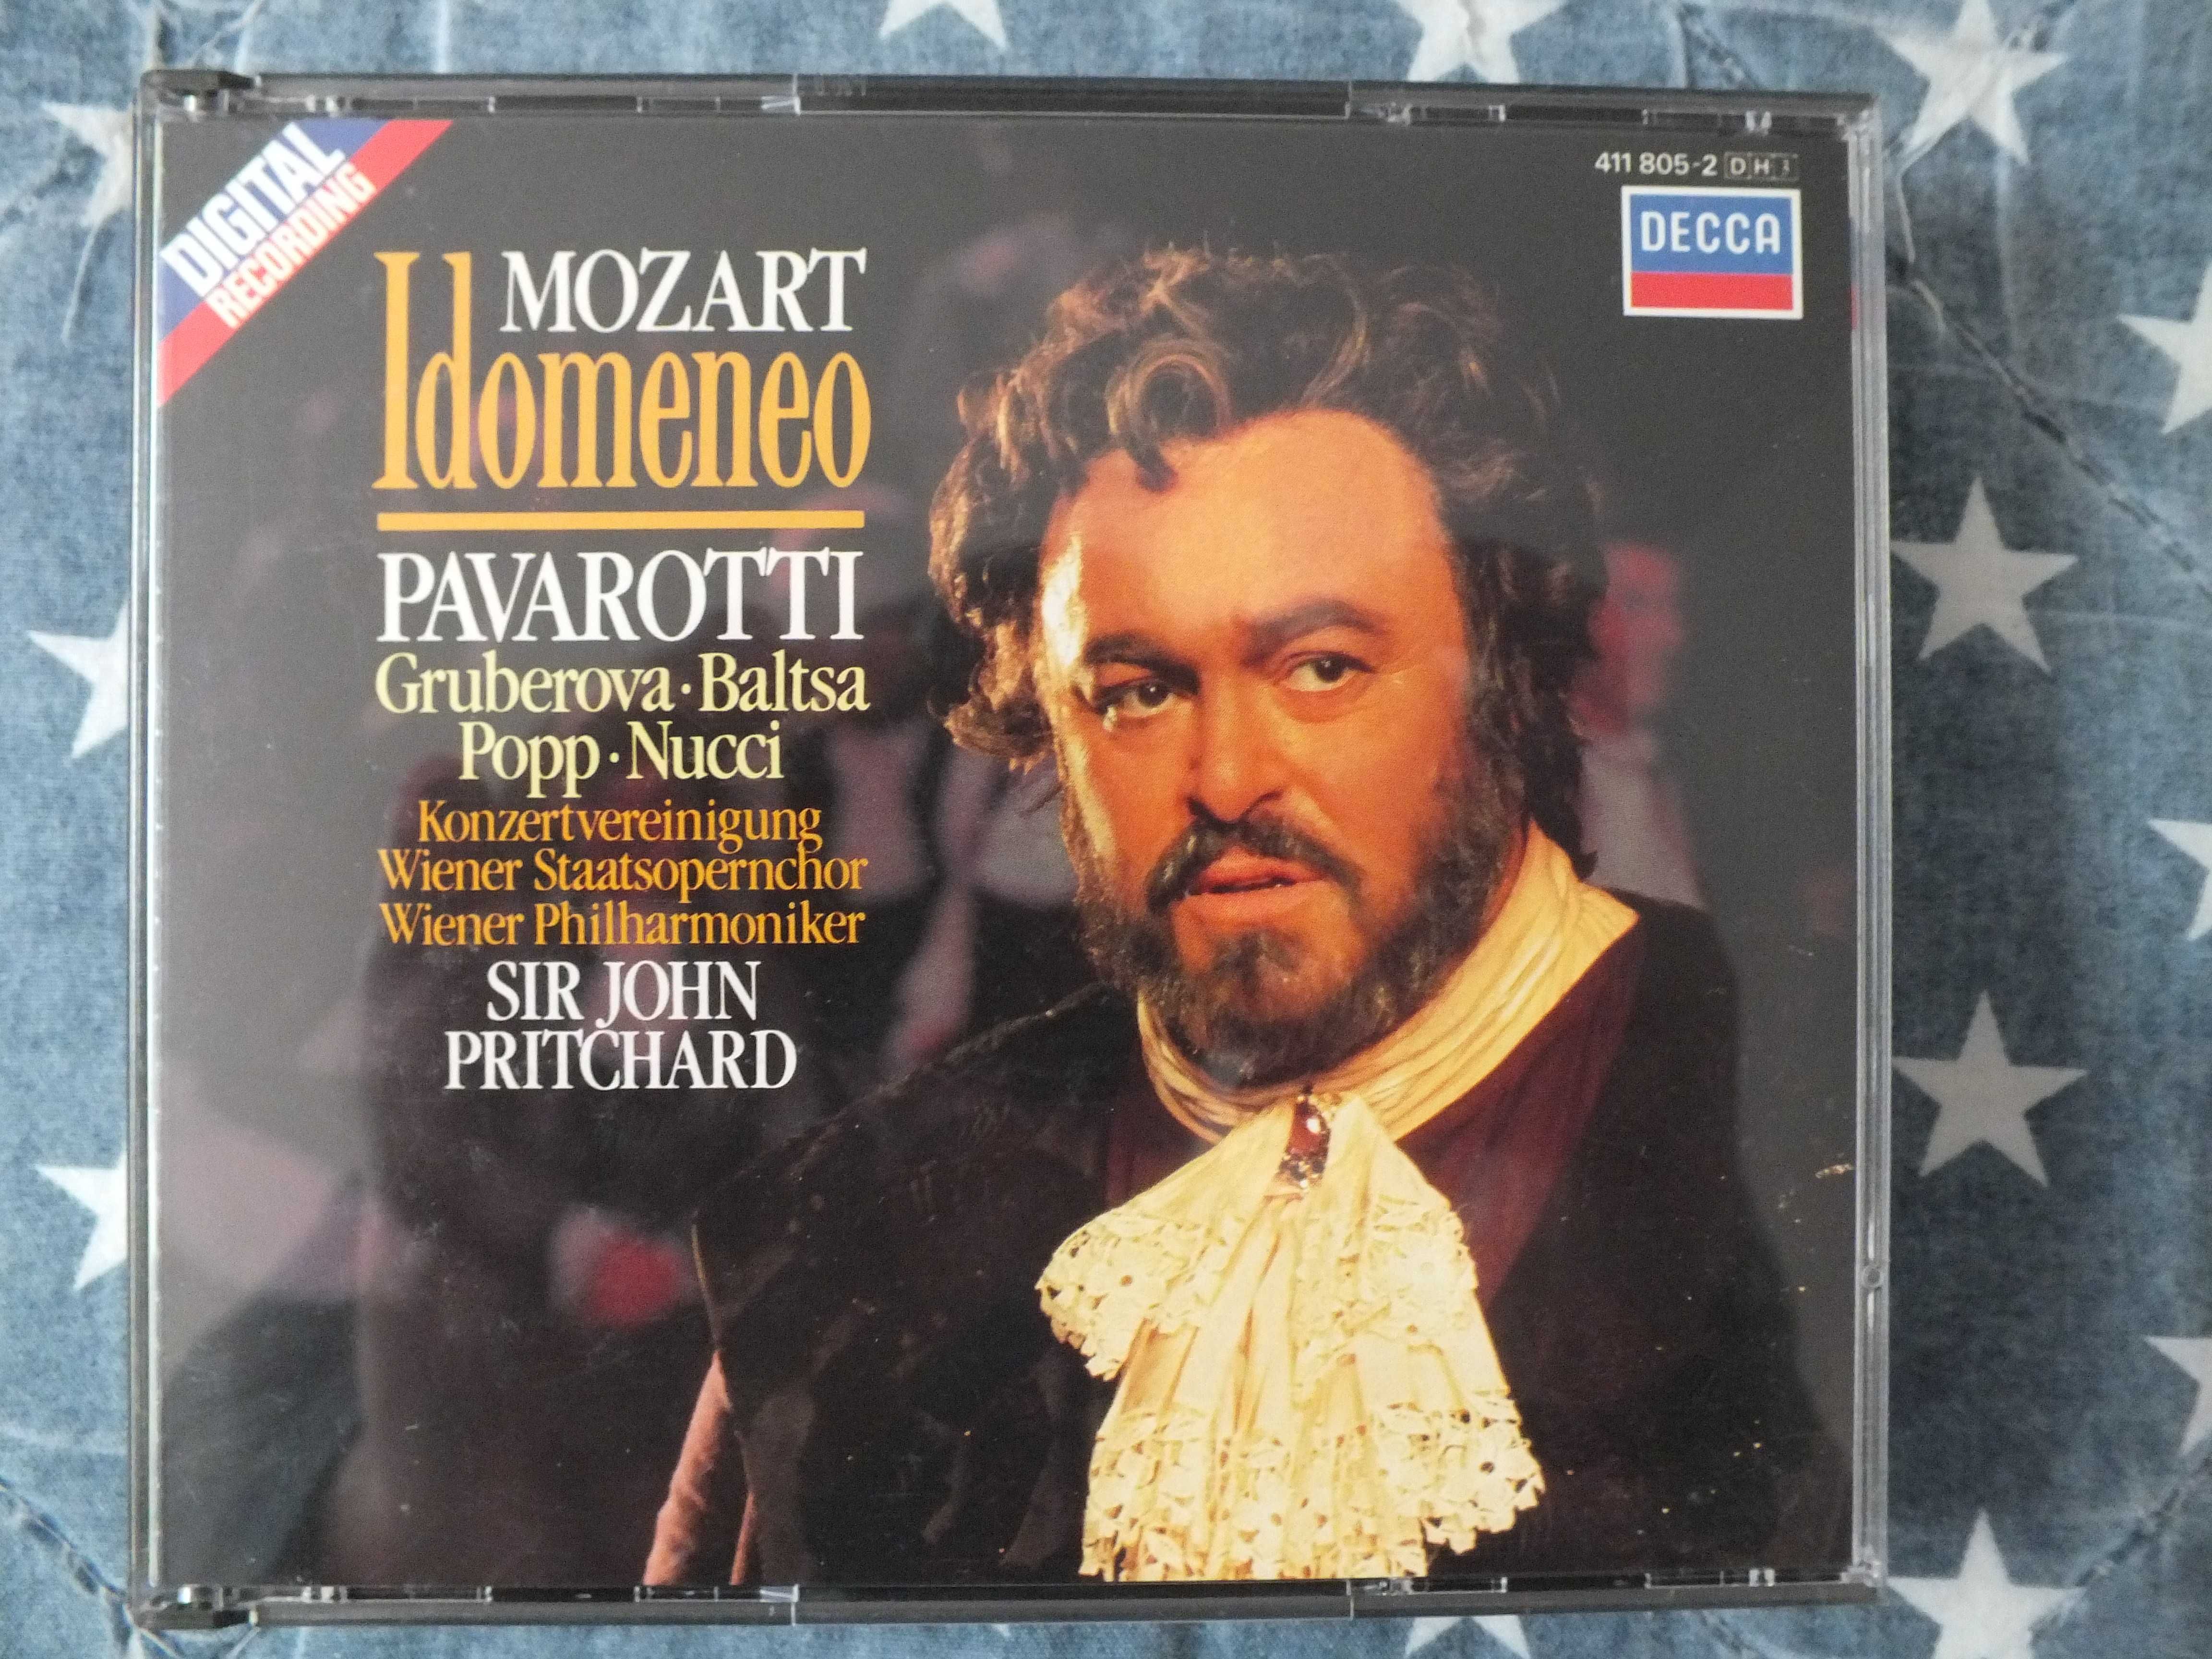 CD Mozart - Idomeneo Pavarotti  -PRITCHARD  88' 3CD  Decca  Idealny